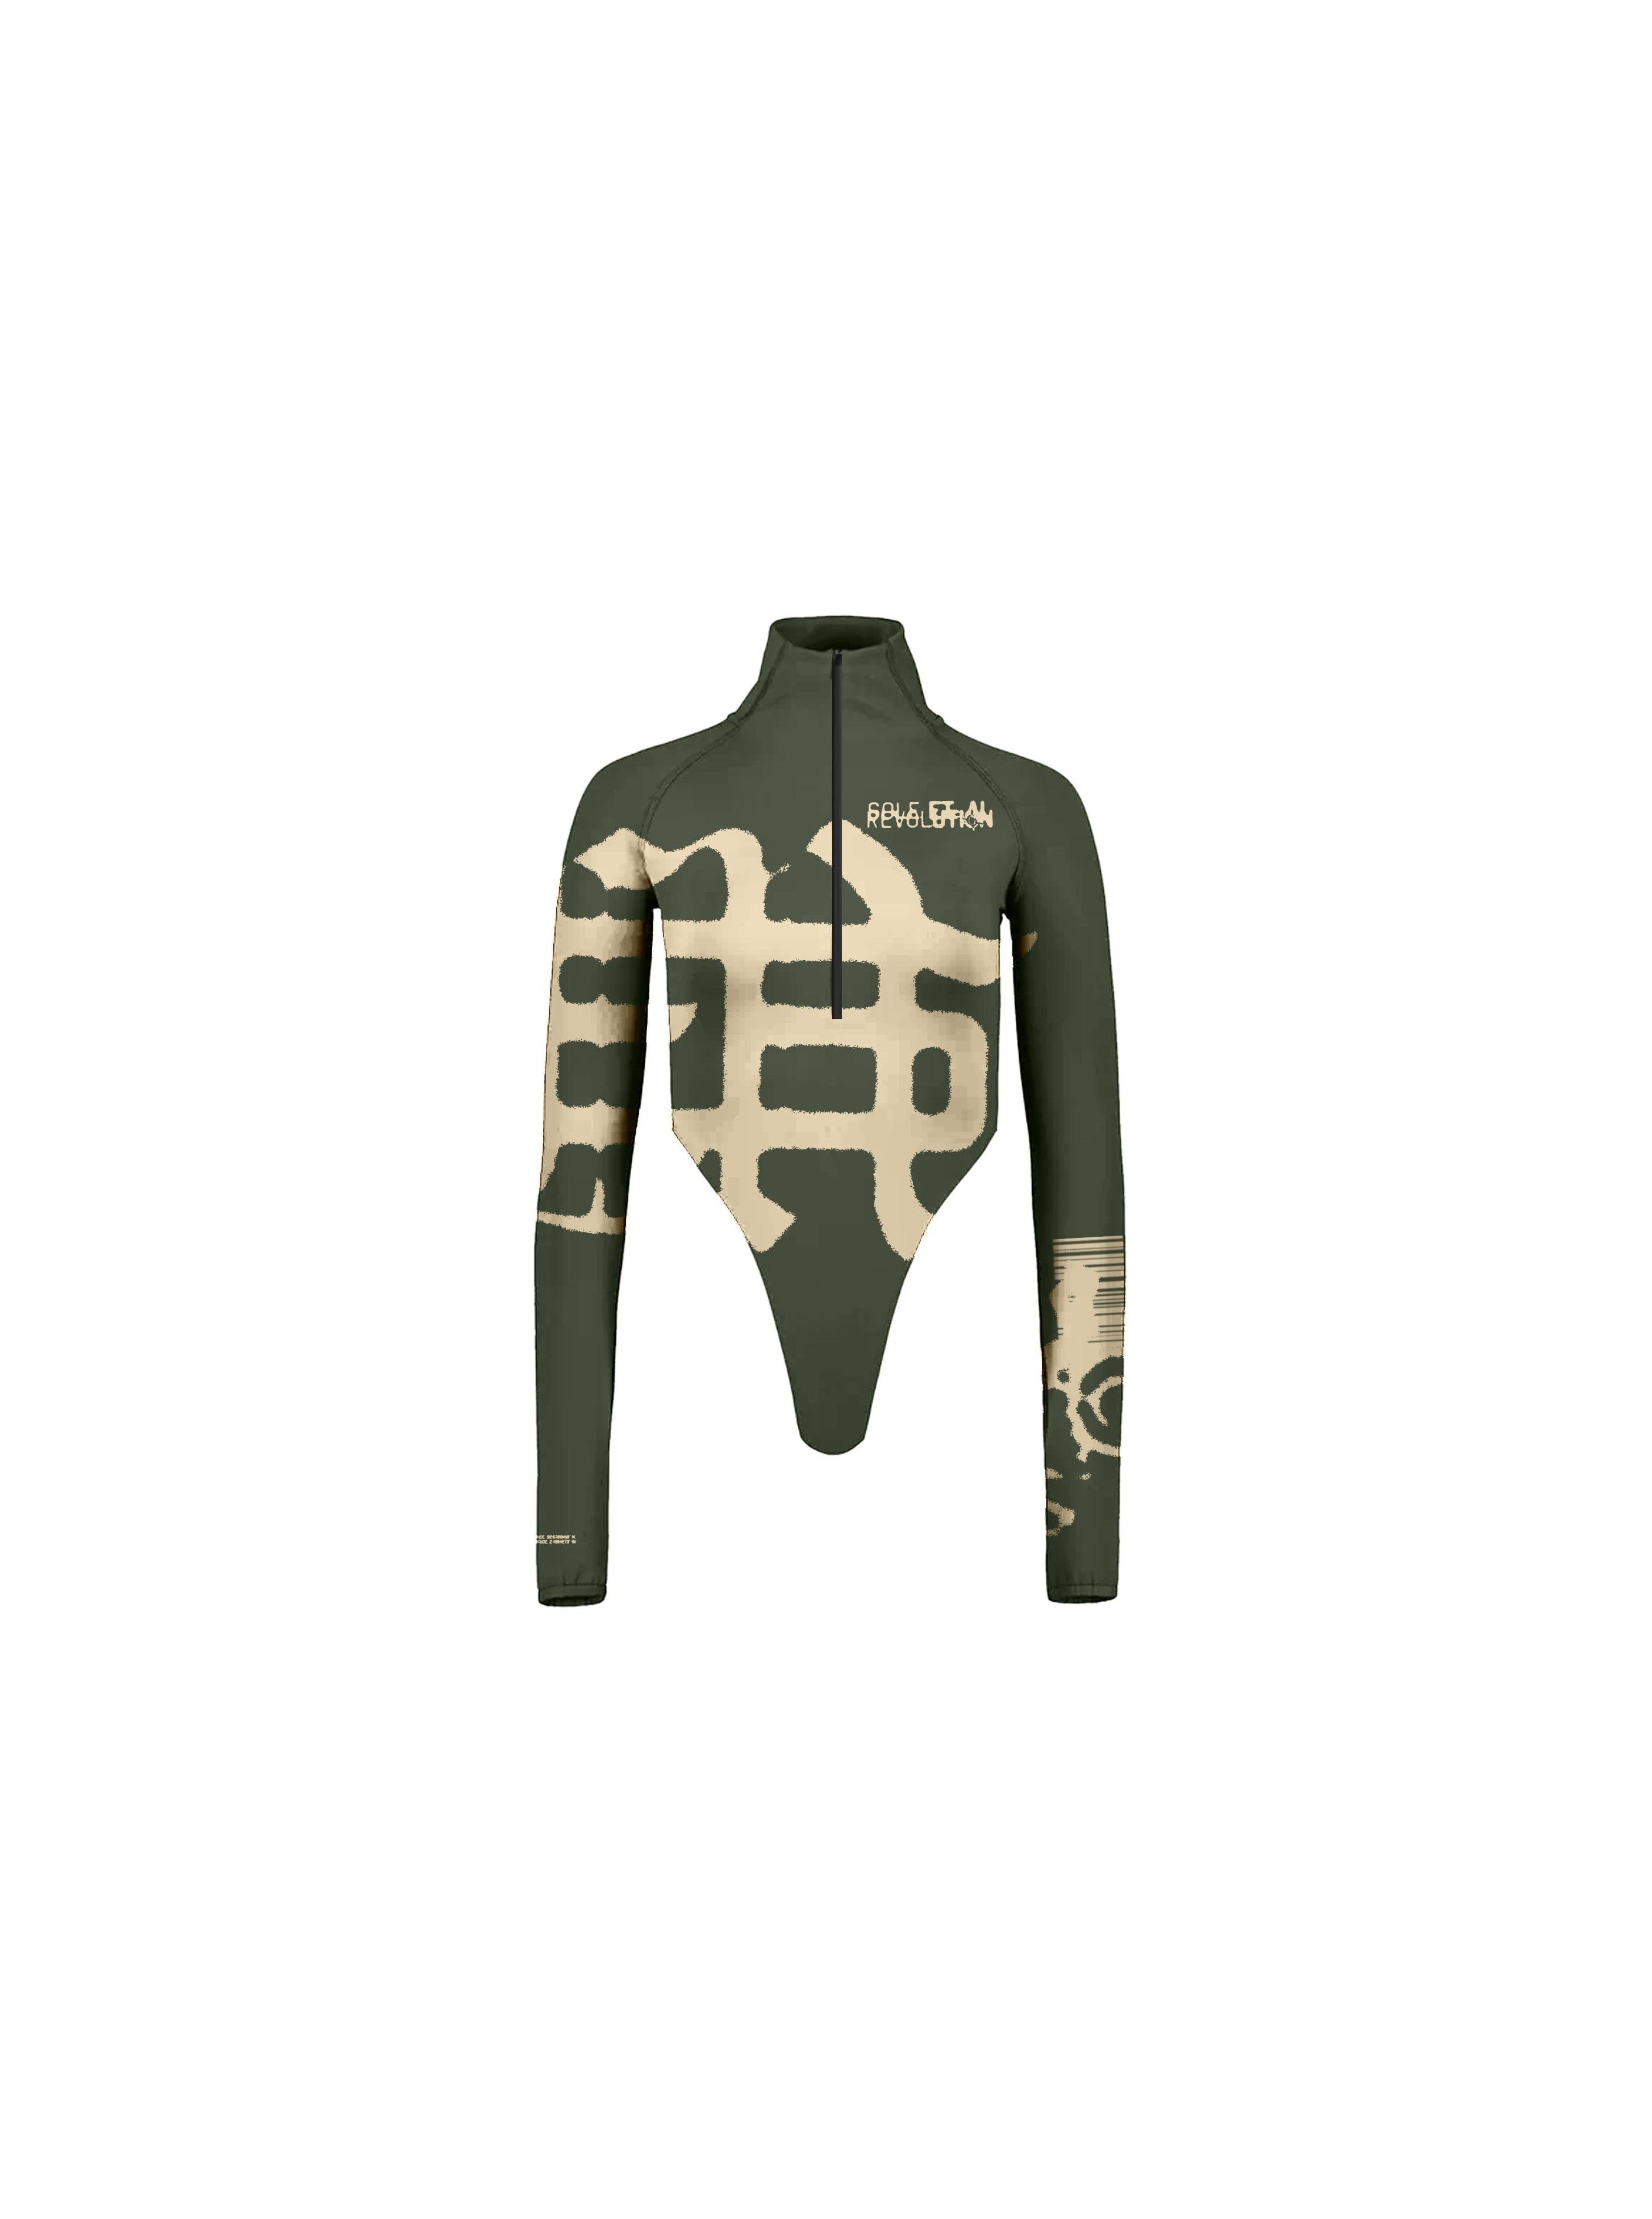 Sole et. Al Revølutiøn Zip Bodysuit : Verde militar / Arena